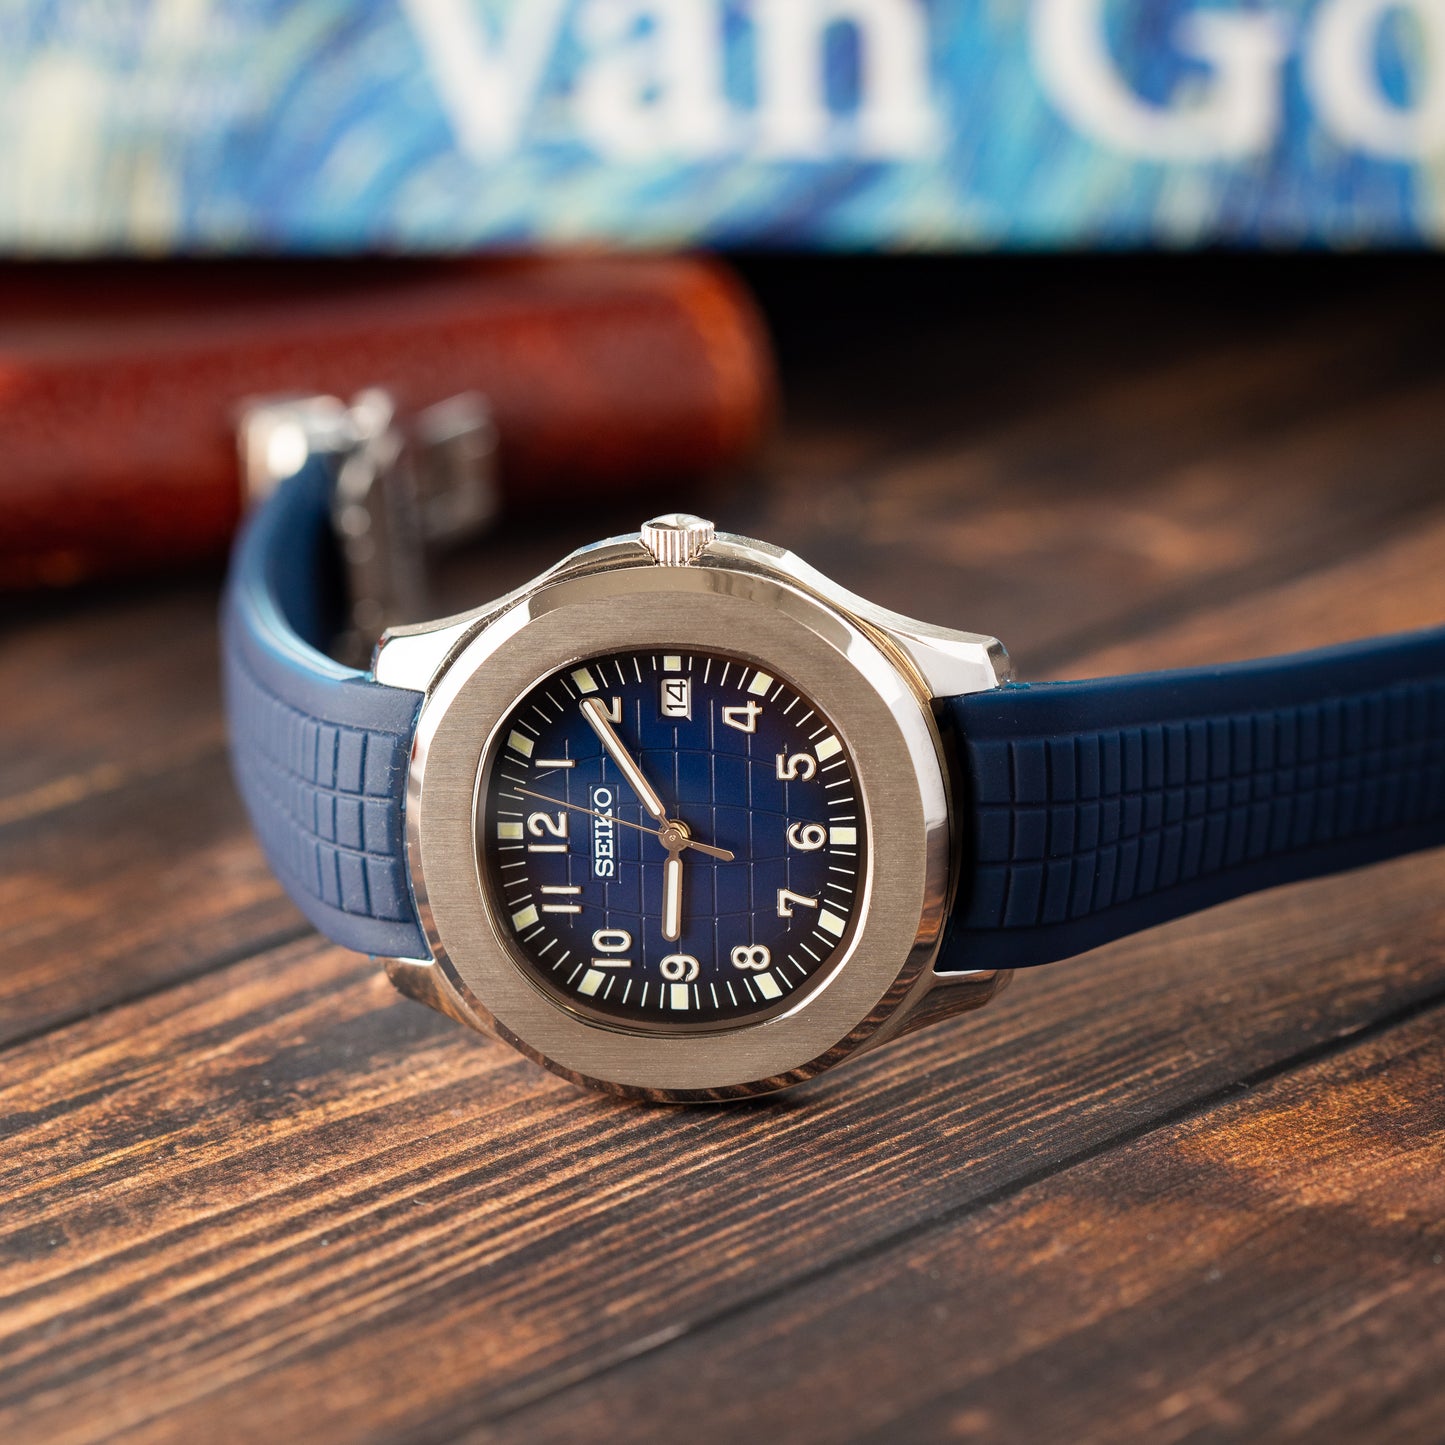 Seiko Mod Blue Nautilus Aquanaut Jumbo Watch with Silicone Strap